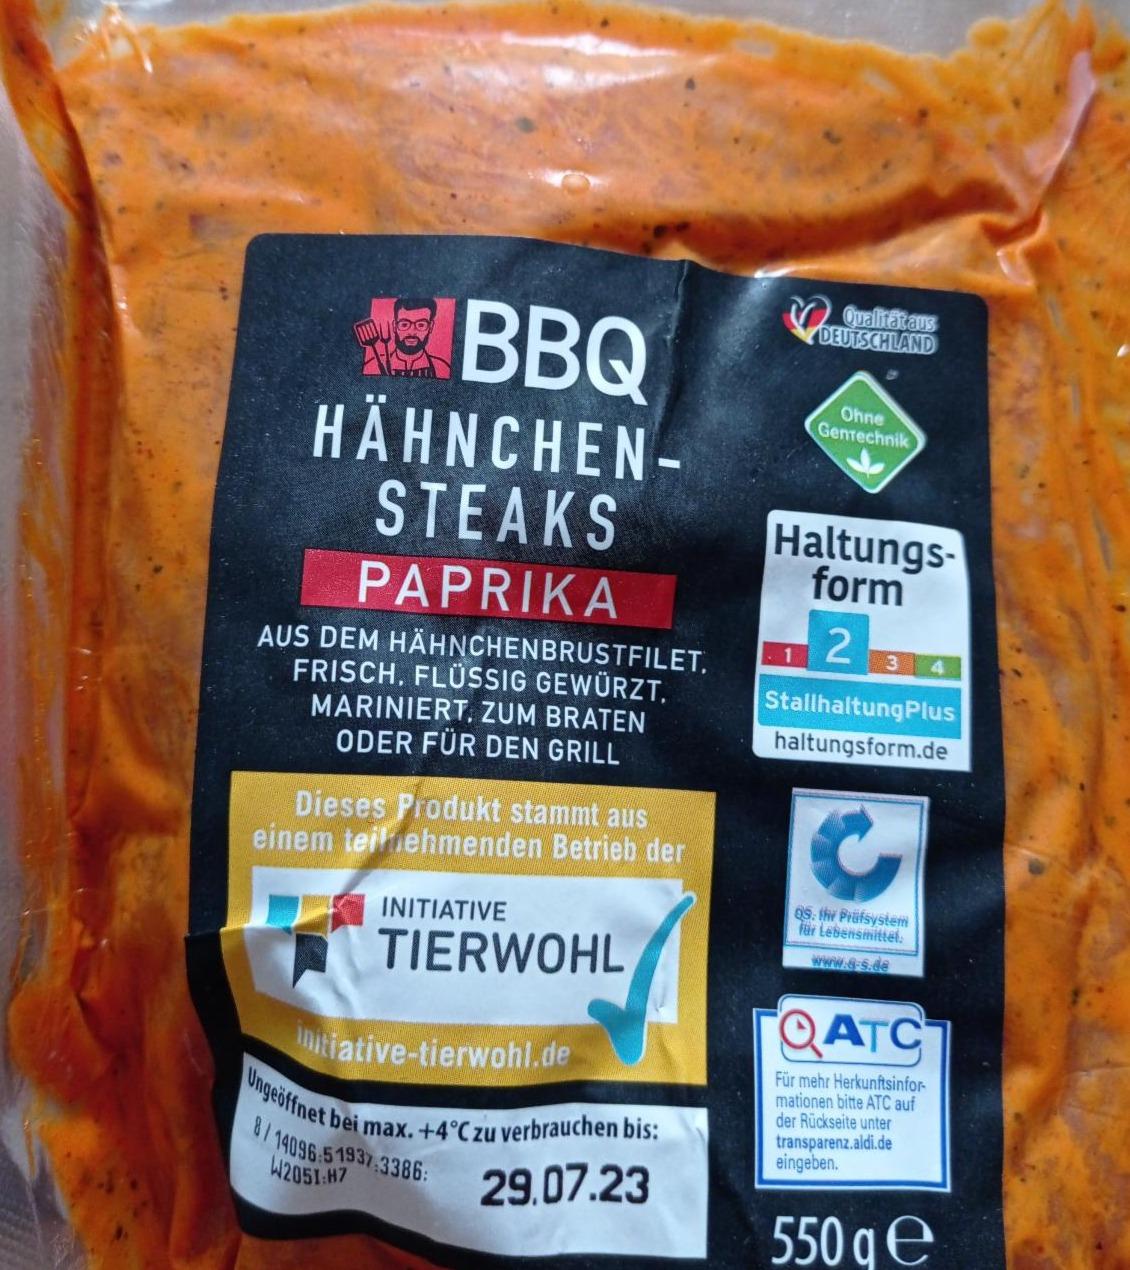 Фото - Hähnchen - steaks paprika BBQ